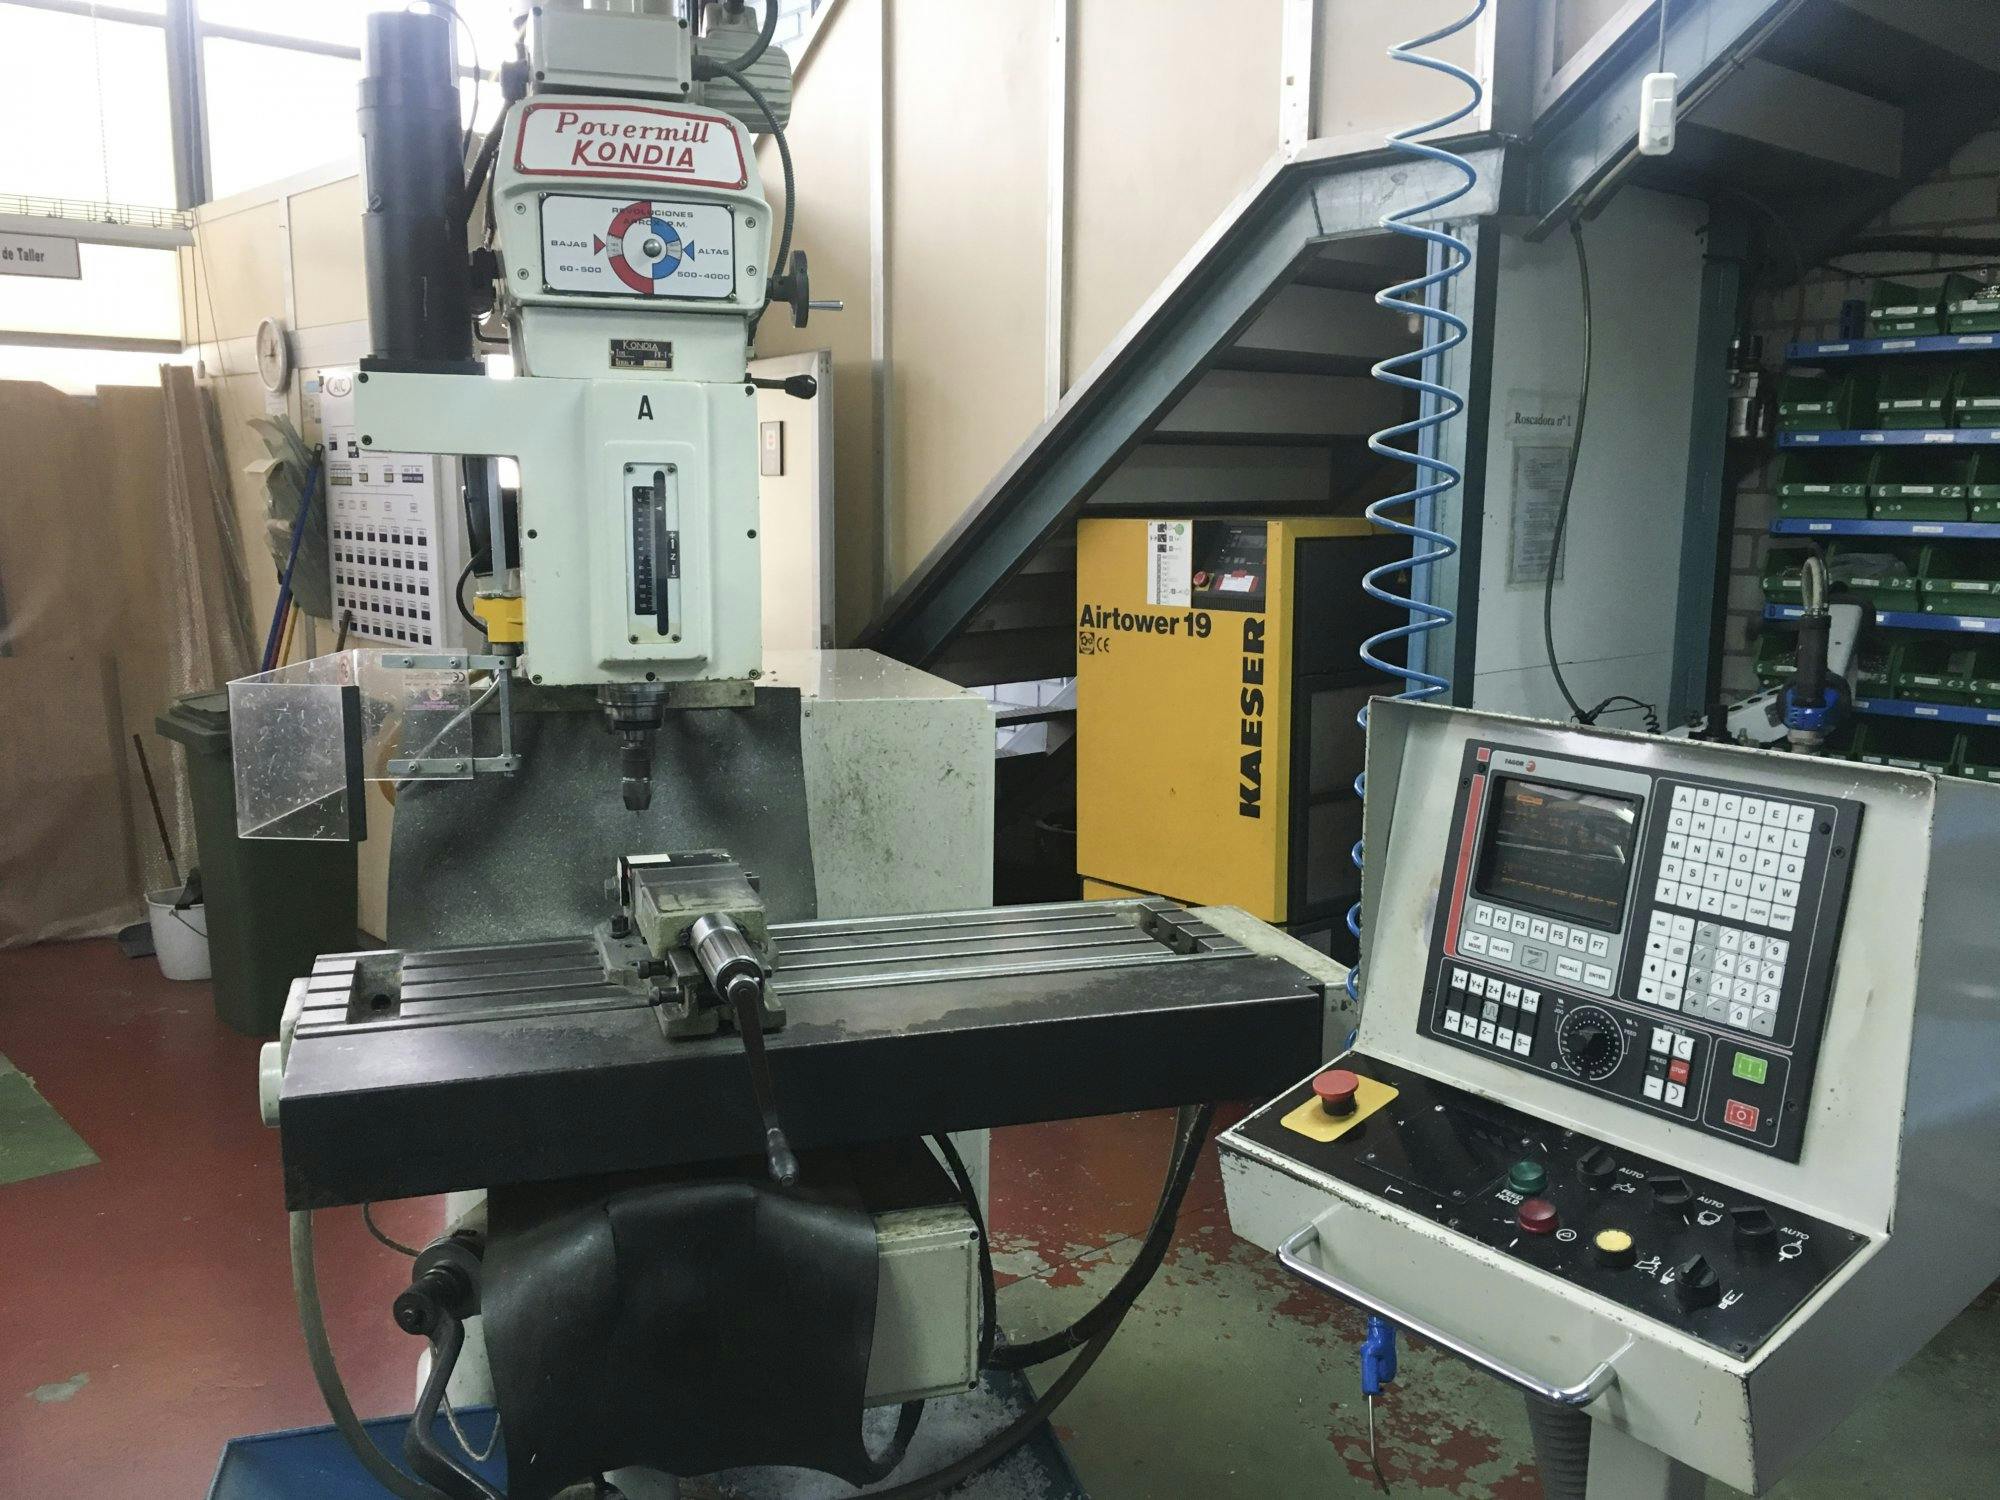 Links zicht  van KONDIA Powermill FV-1 CNC machine